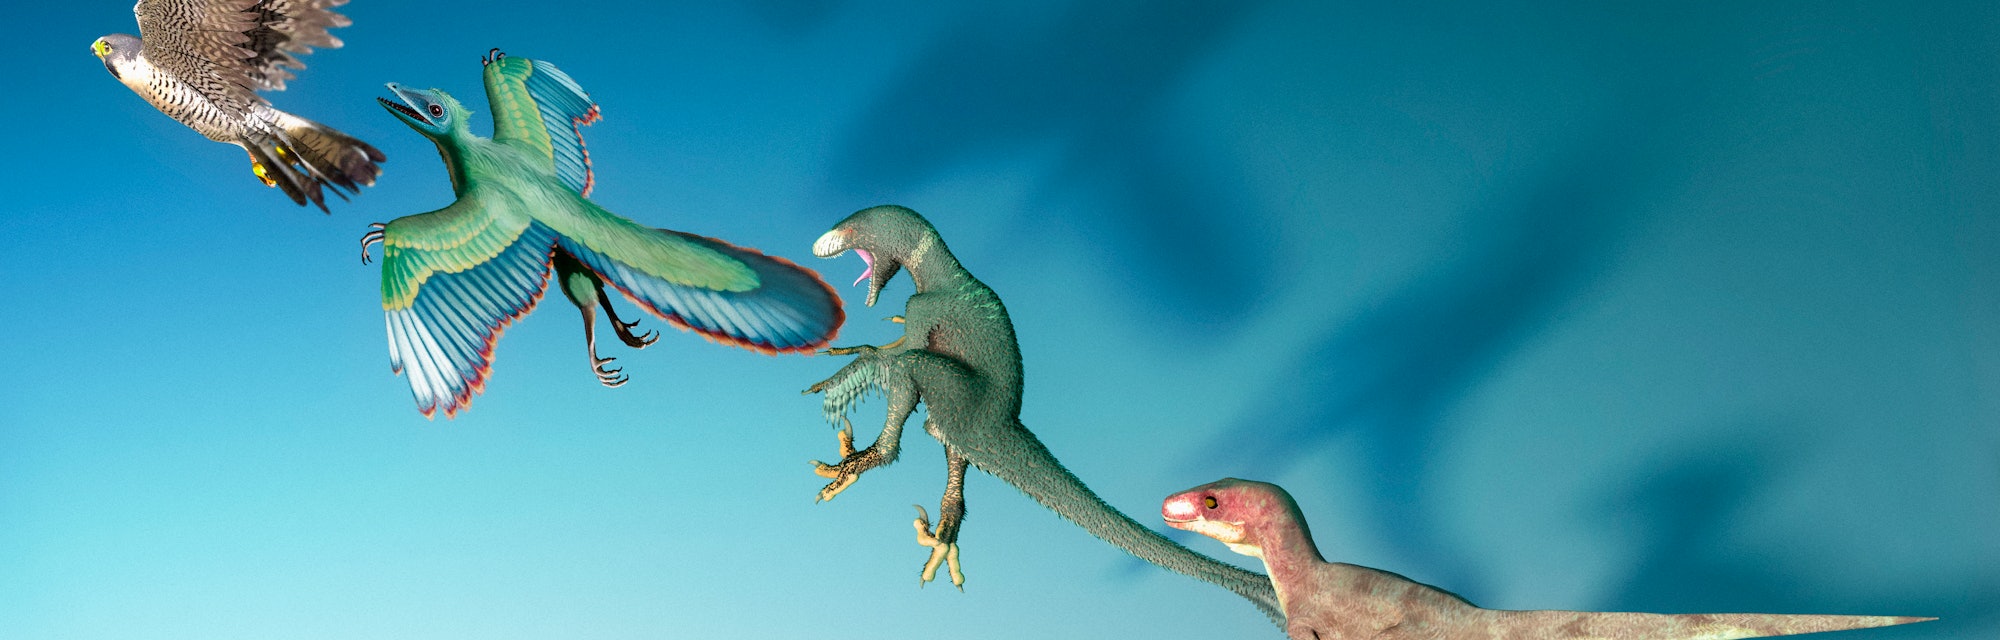 Evolution of birds, illustration. Modern birds (left) evolved from therapod dinosaurs (right) that l...